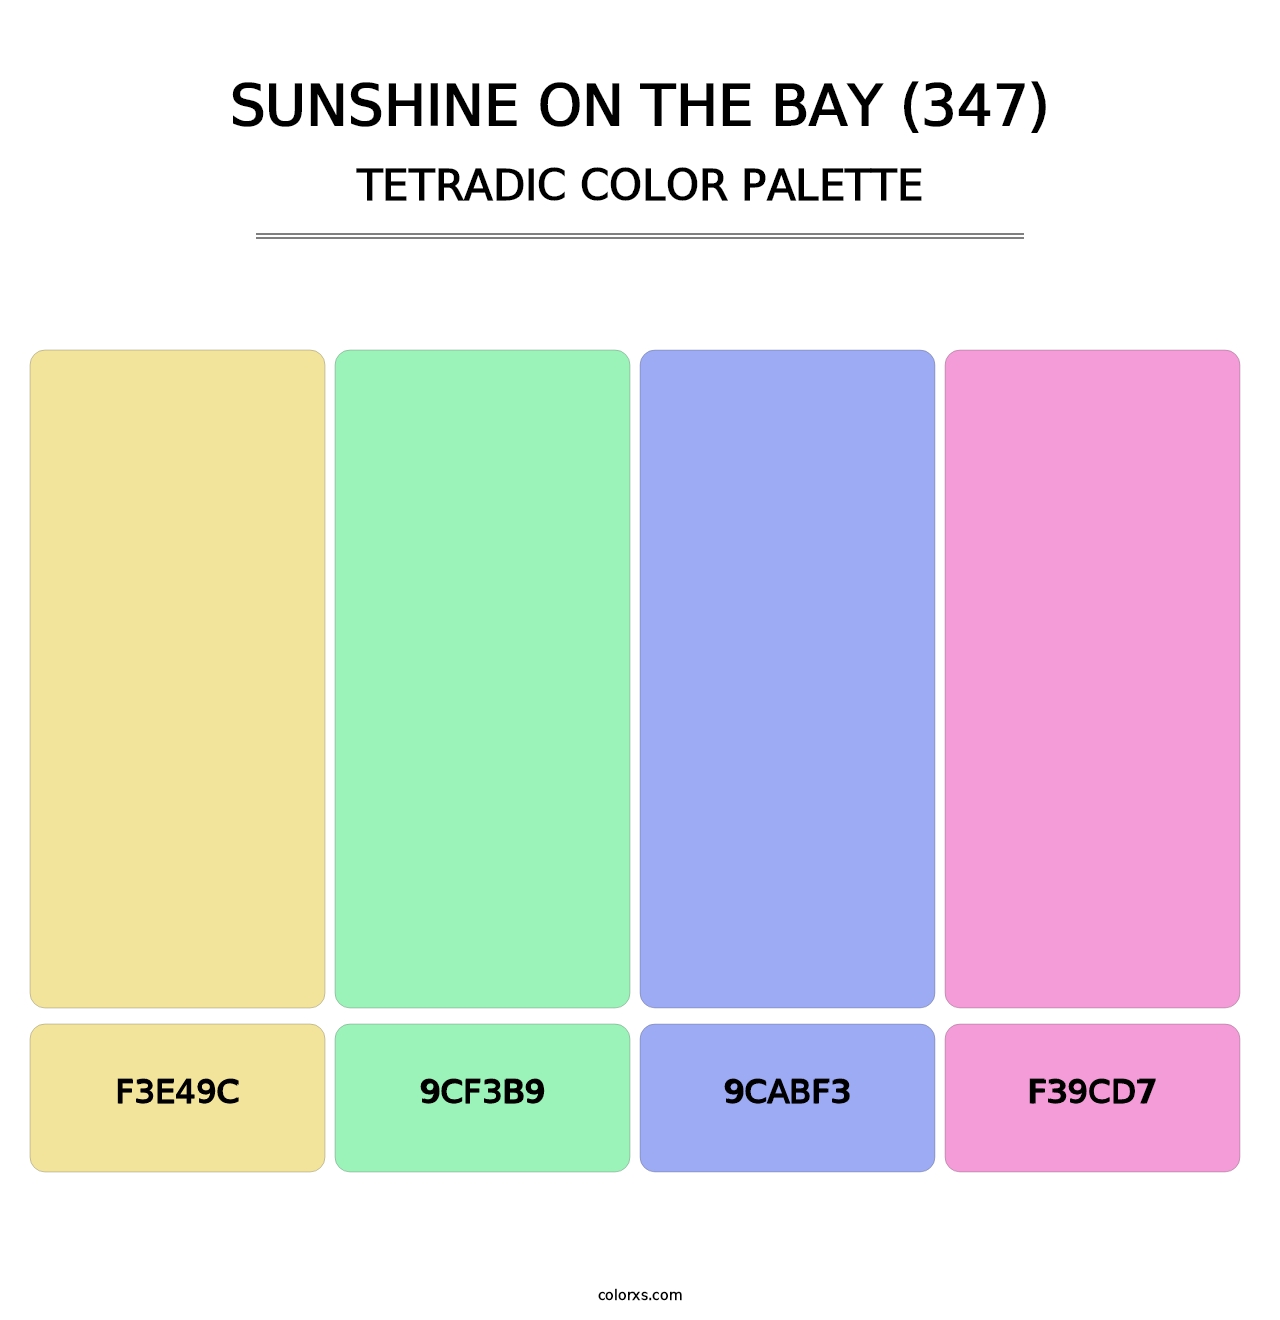 Sunshine on the Bay (347) - Tetradic Color Palette